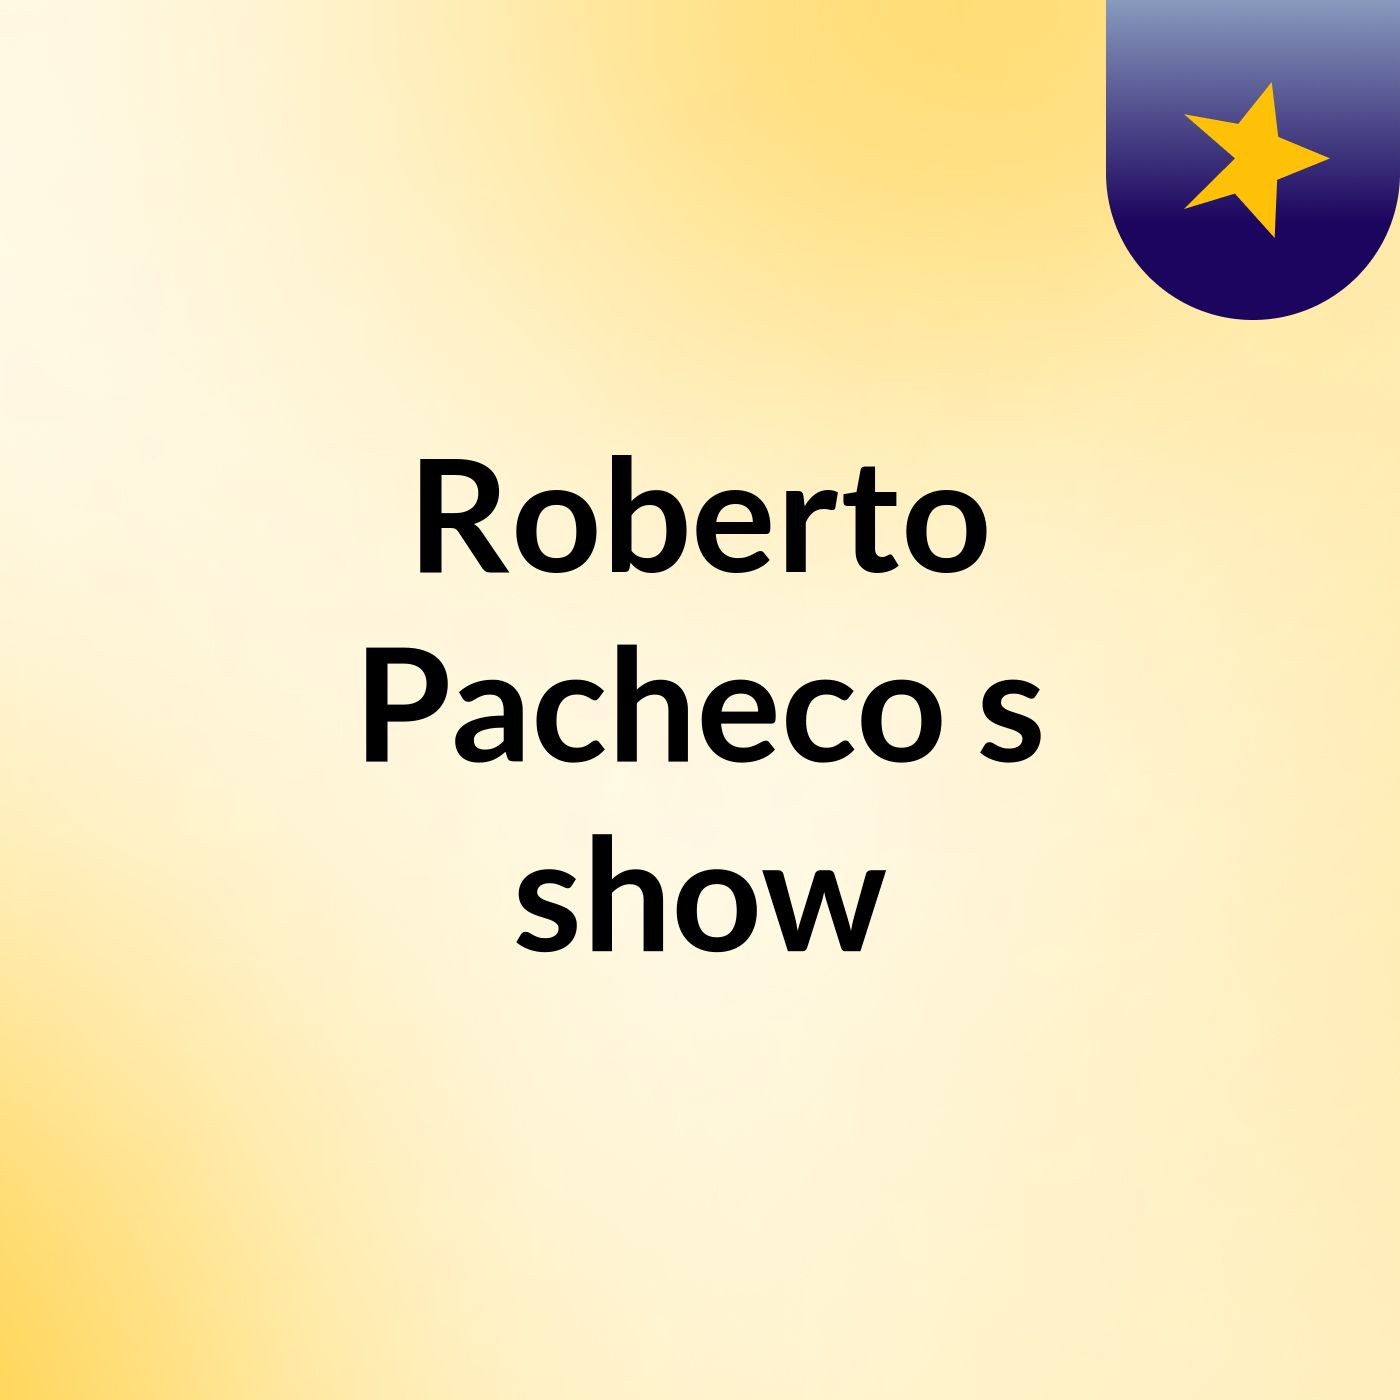 Roberto Pacheco's show